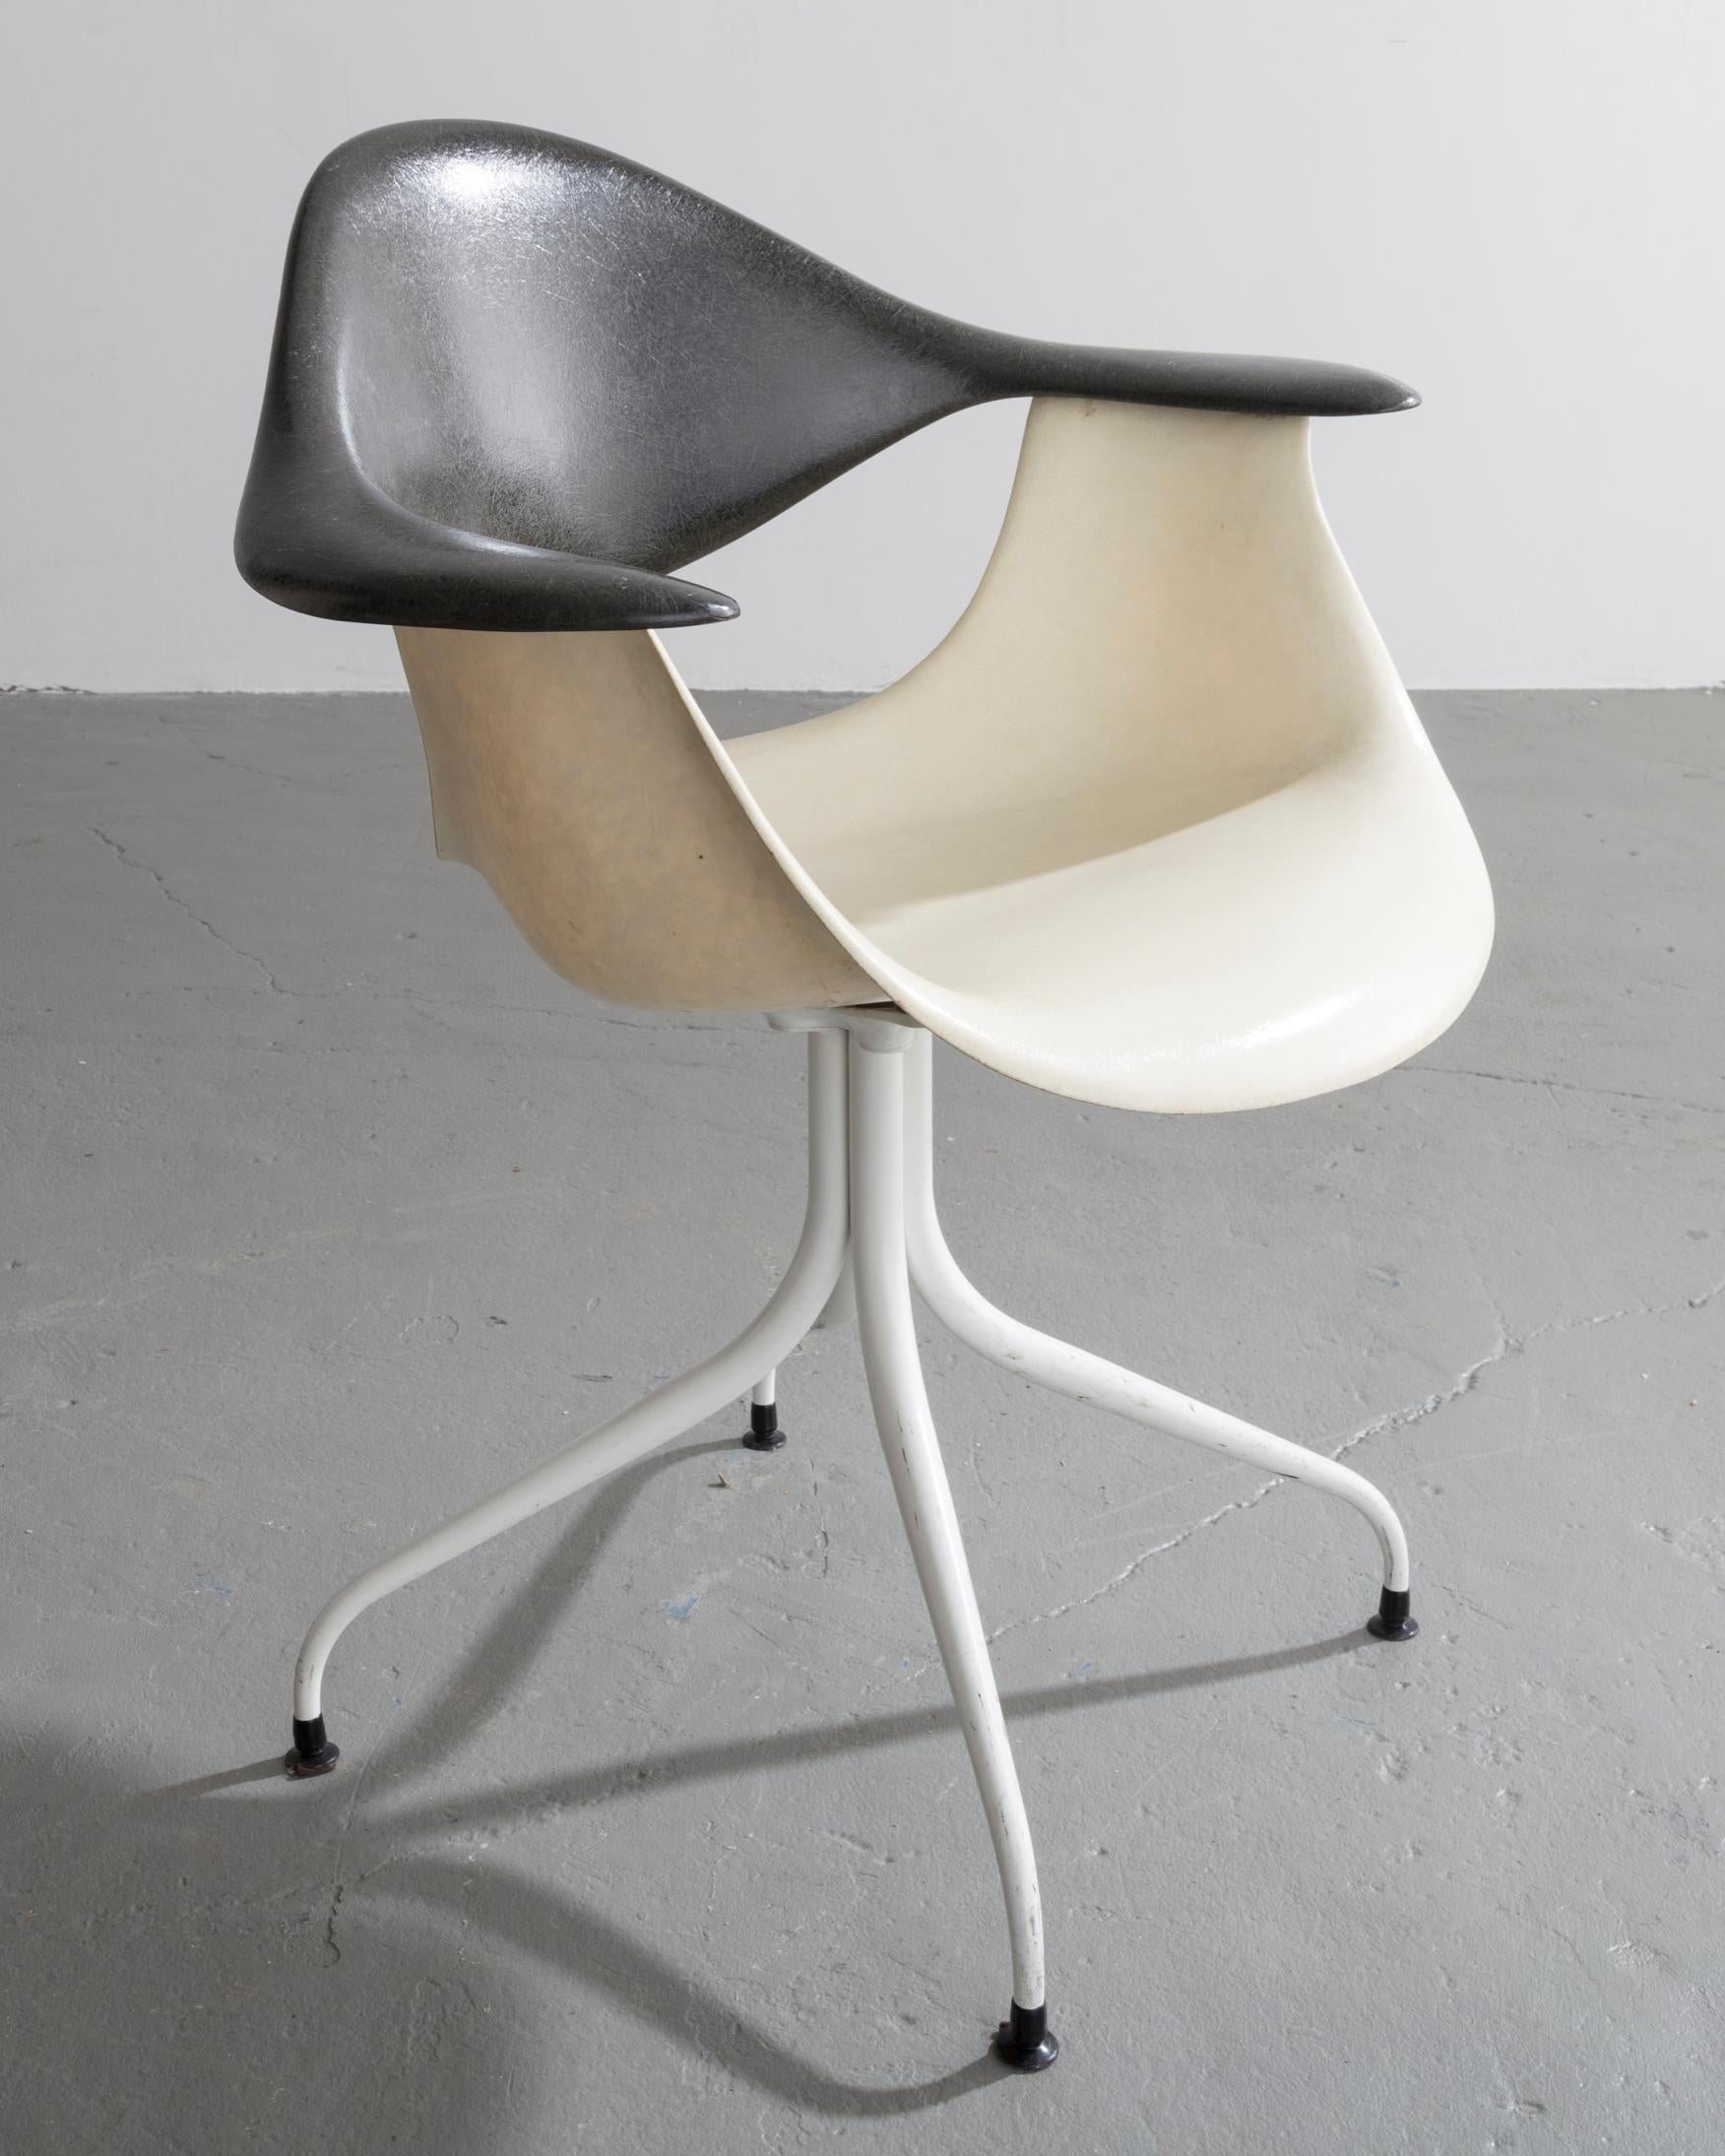 Swaged leg chair, model MAF, in fiberglass, enameled steel, rubber, enameled aluminum, and plastic. Designed by George Nelson & Associates for Herman Miller, USA, 1954.